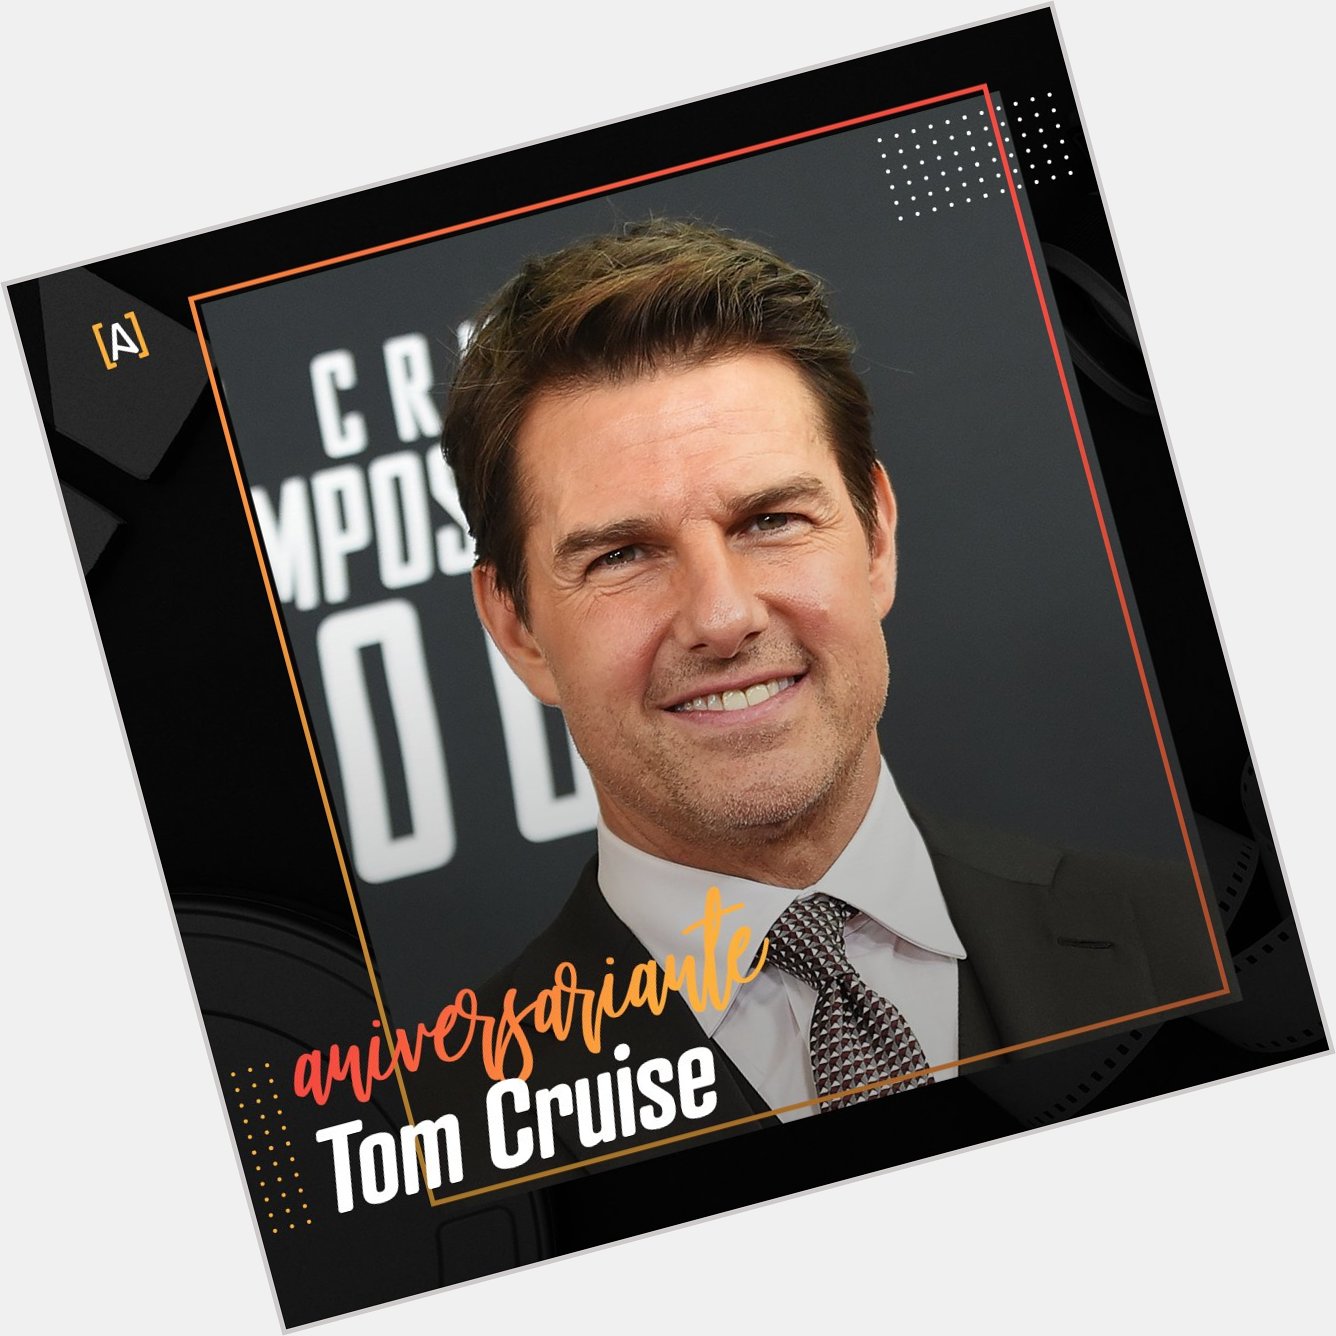 Tom Cruise chegou aos 59 anos!
Happy birthday Tom! 